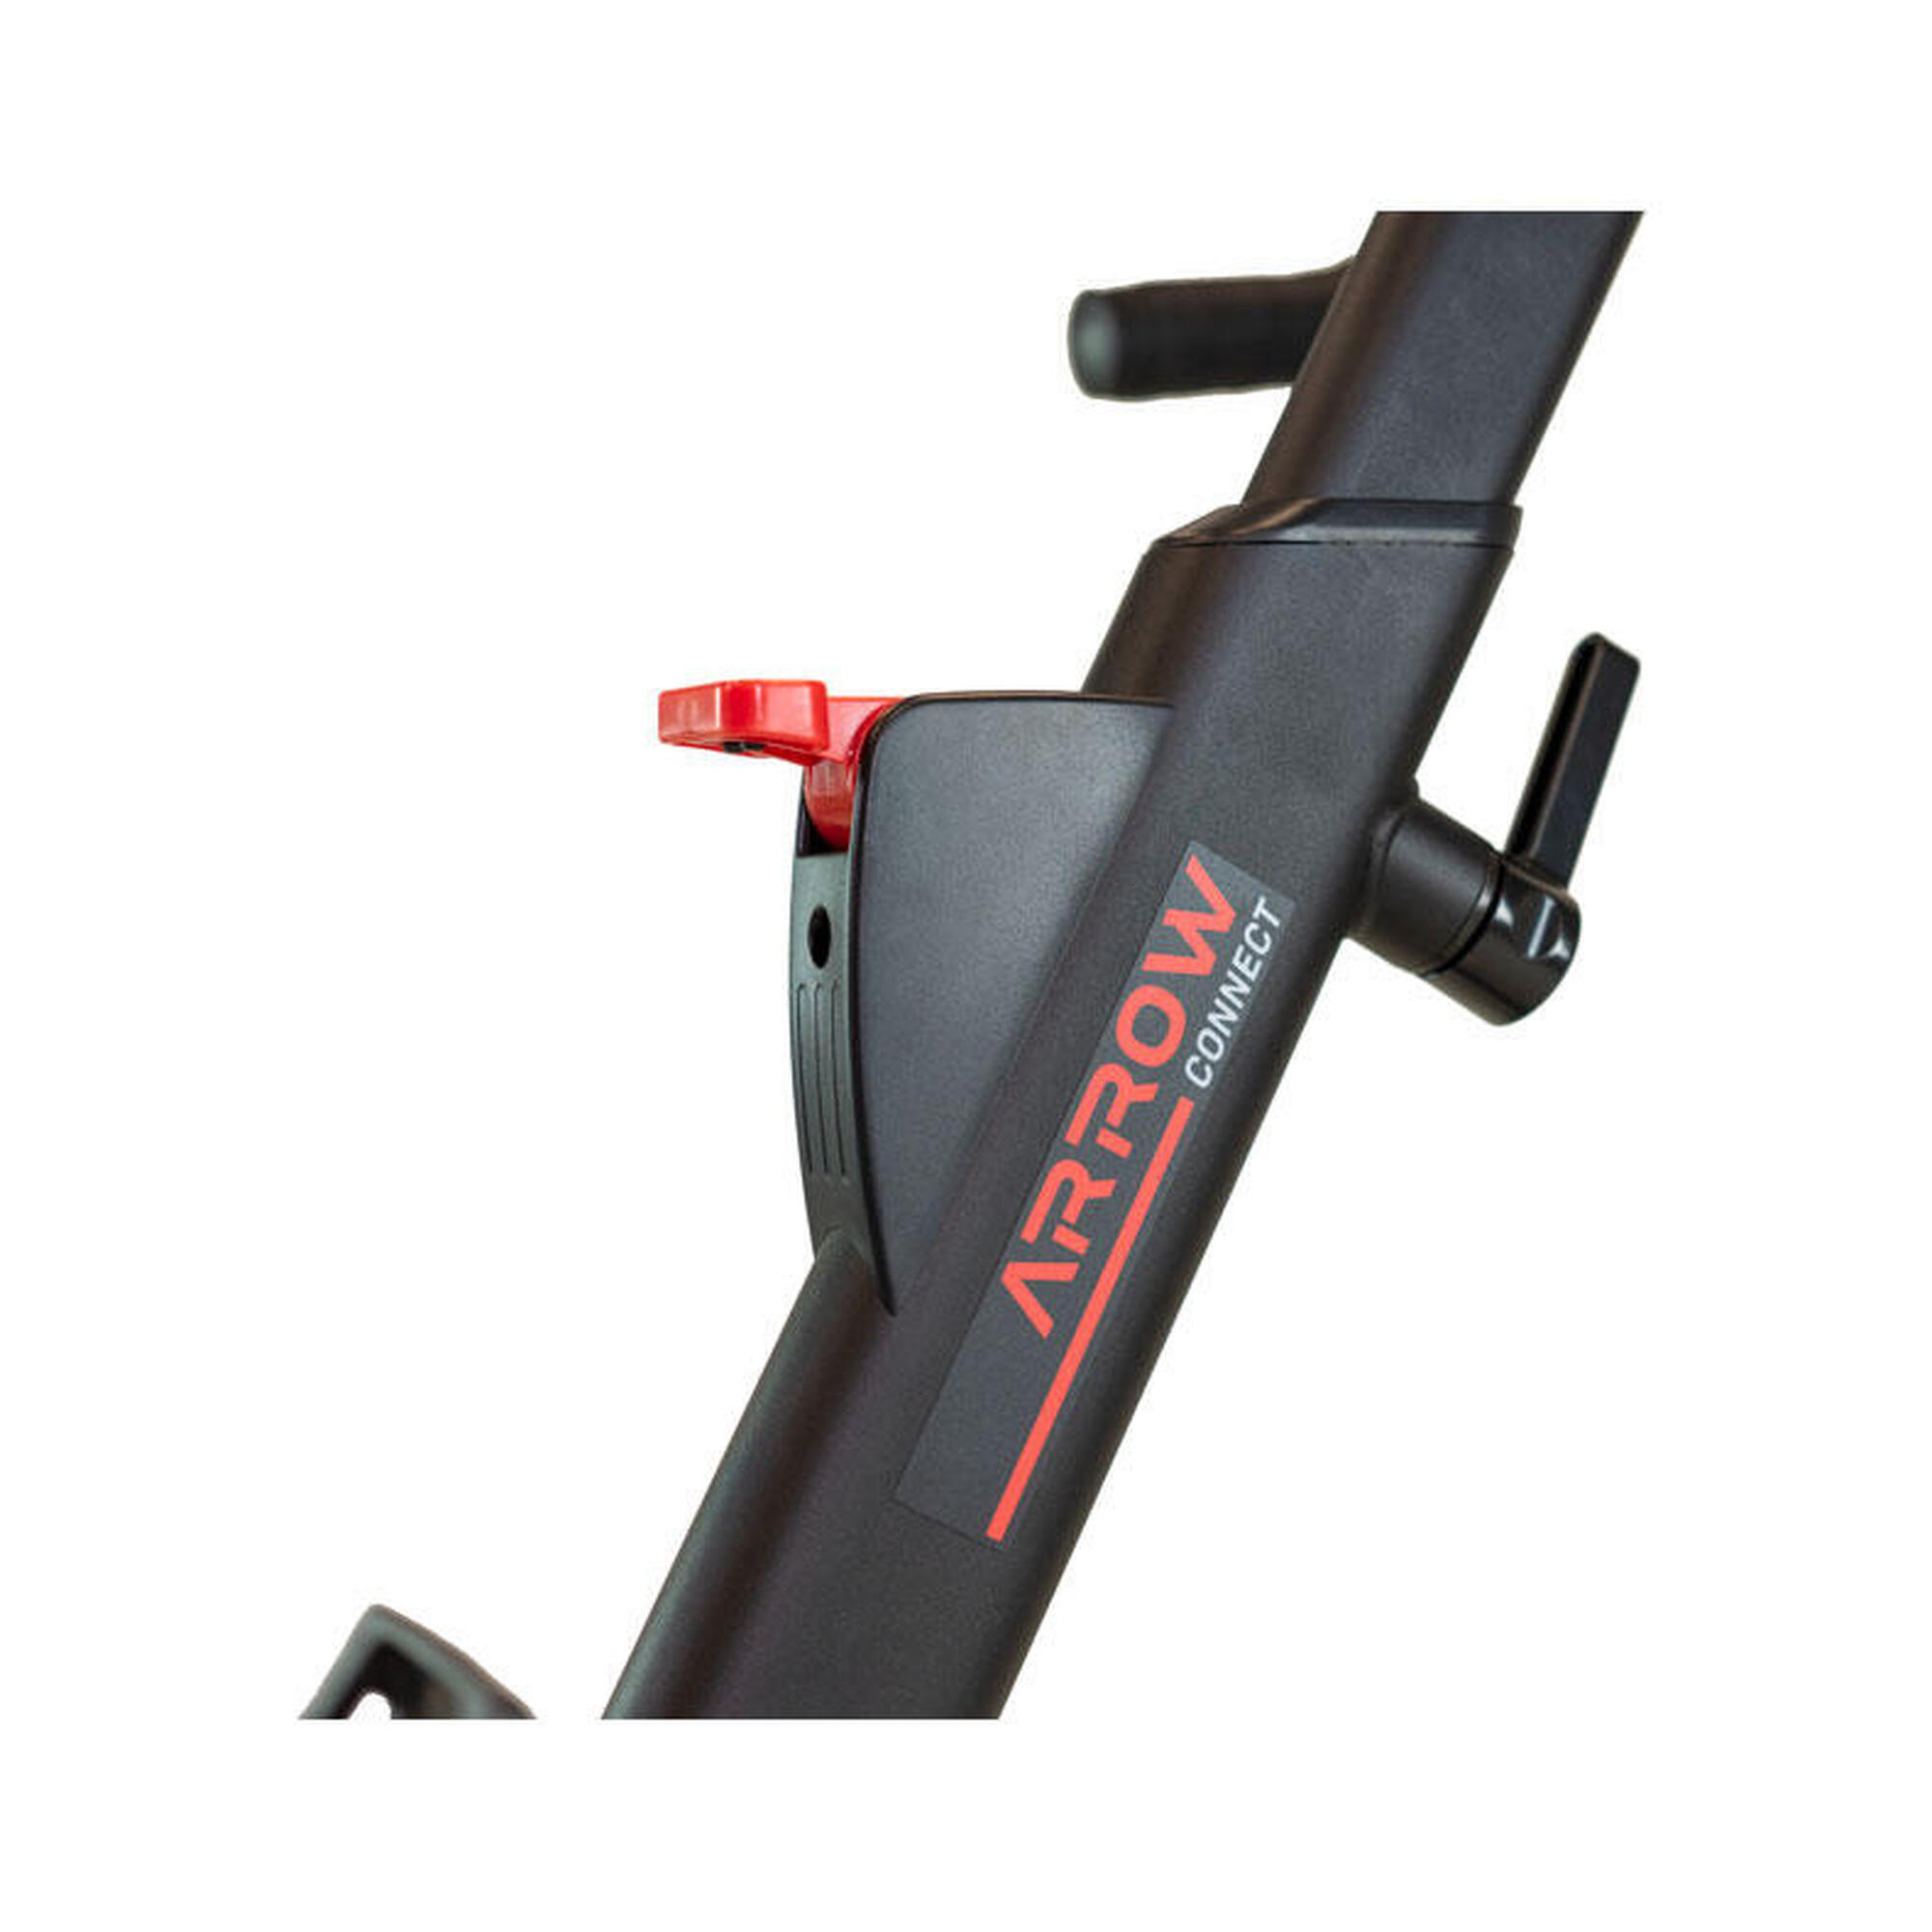 Smart Bike - Arrow Connect - Kinomap,Zwift,Trainerroad -Inércia 16kg